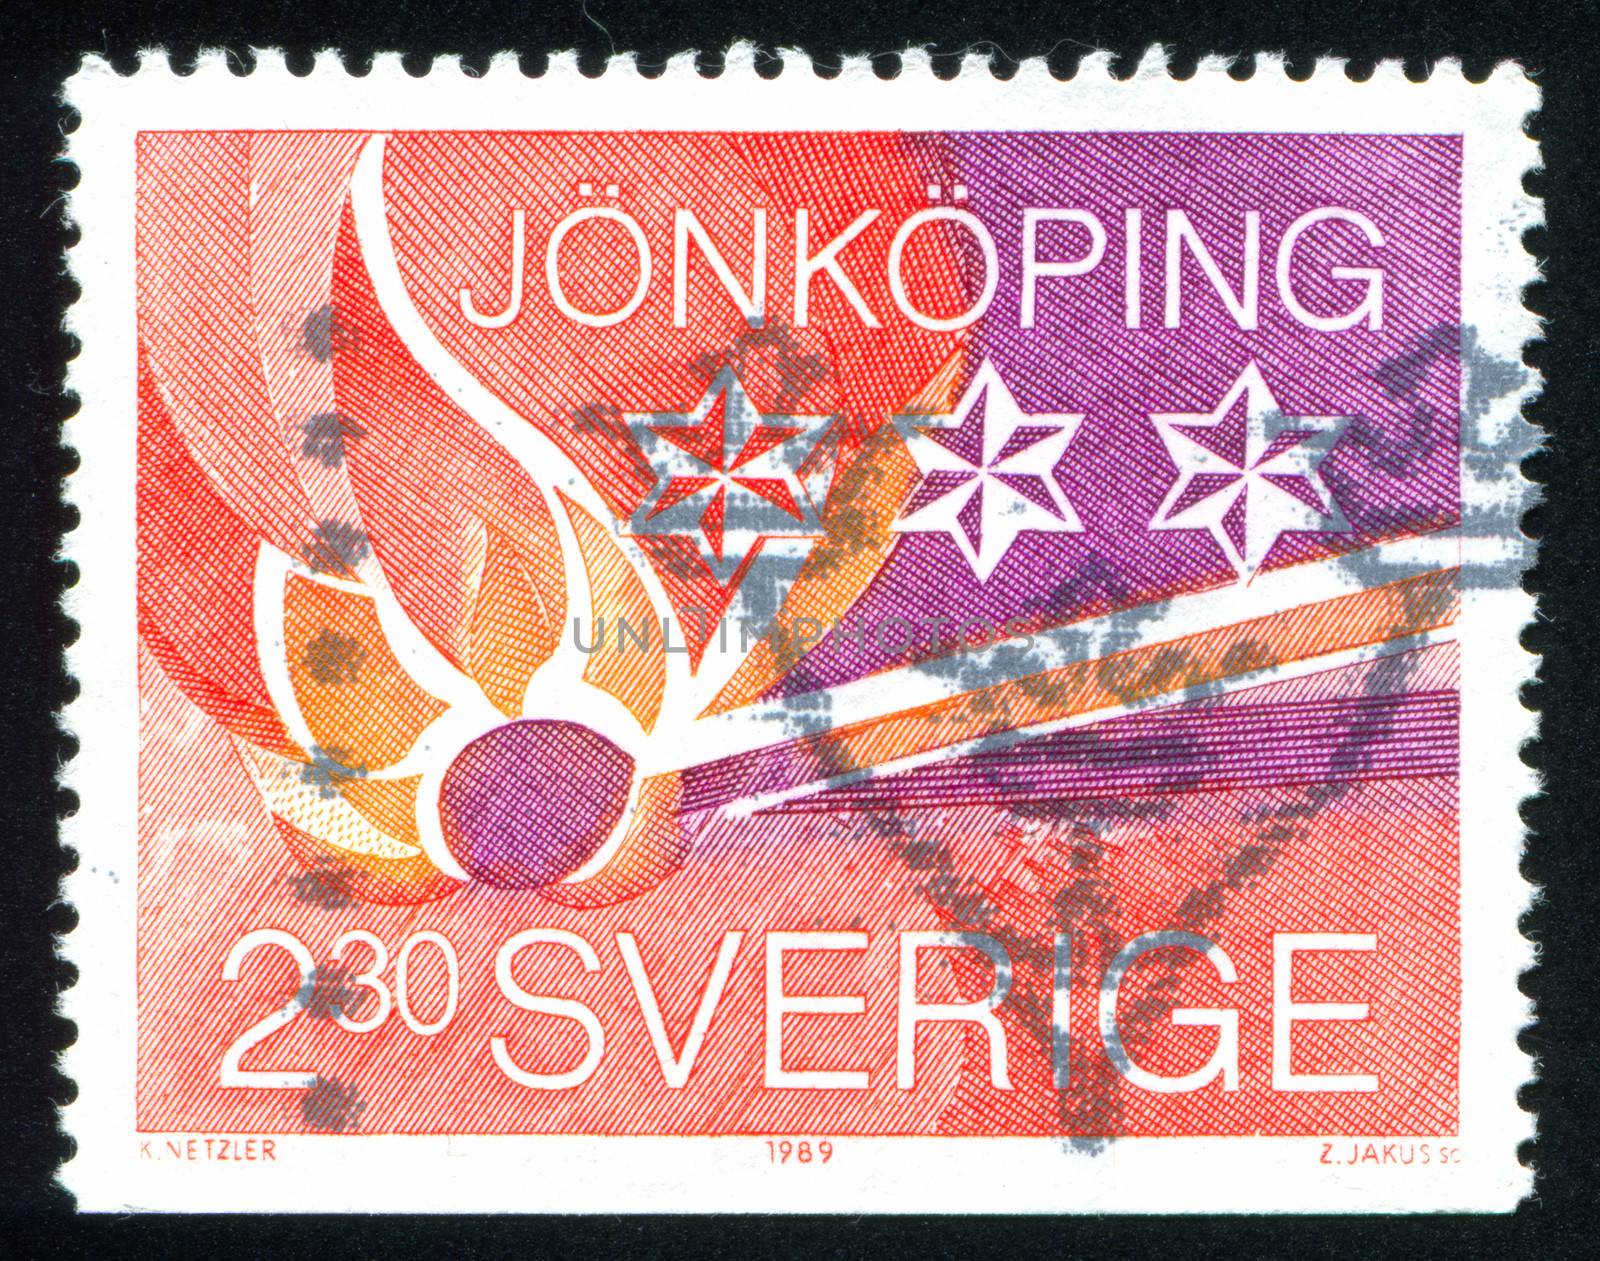 SWEDEN - CIRCA 1989: stamp printed by Sweden, shows Matchsticks, circa 1989